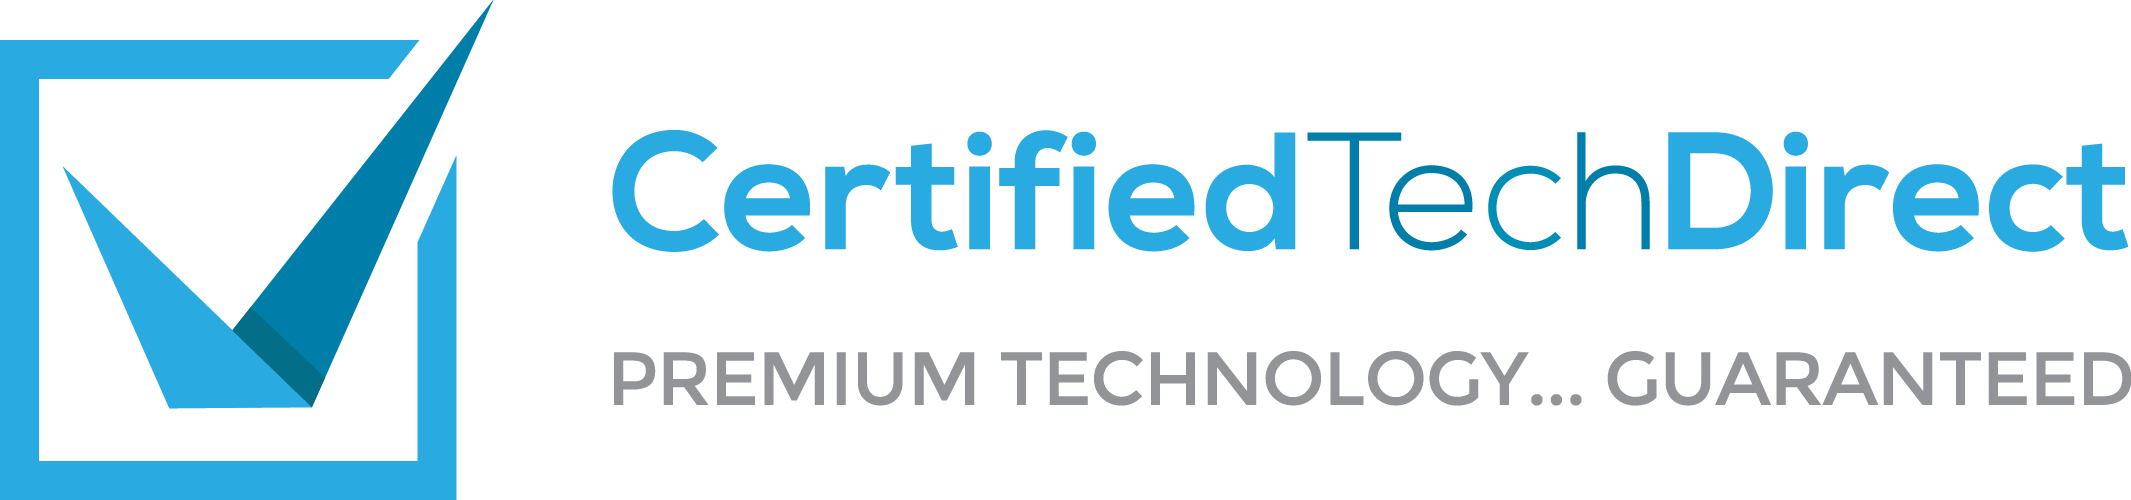 Certifiedtechdirect